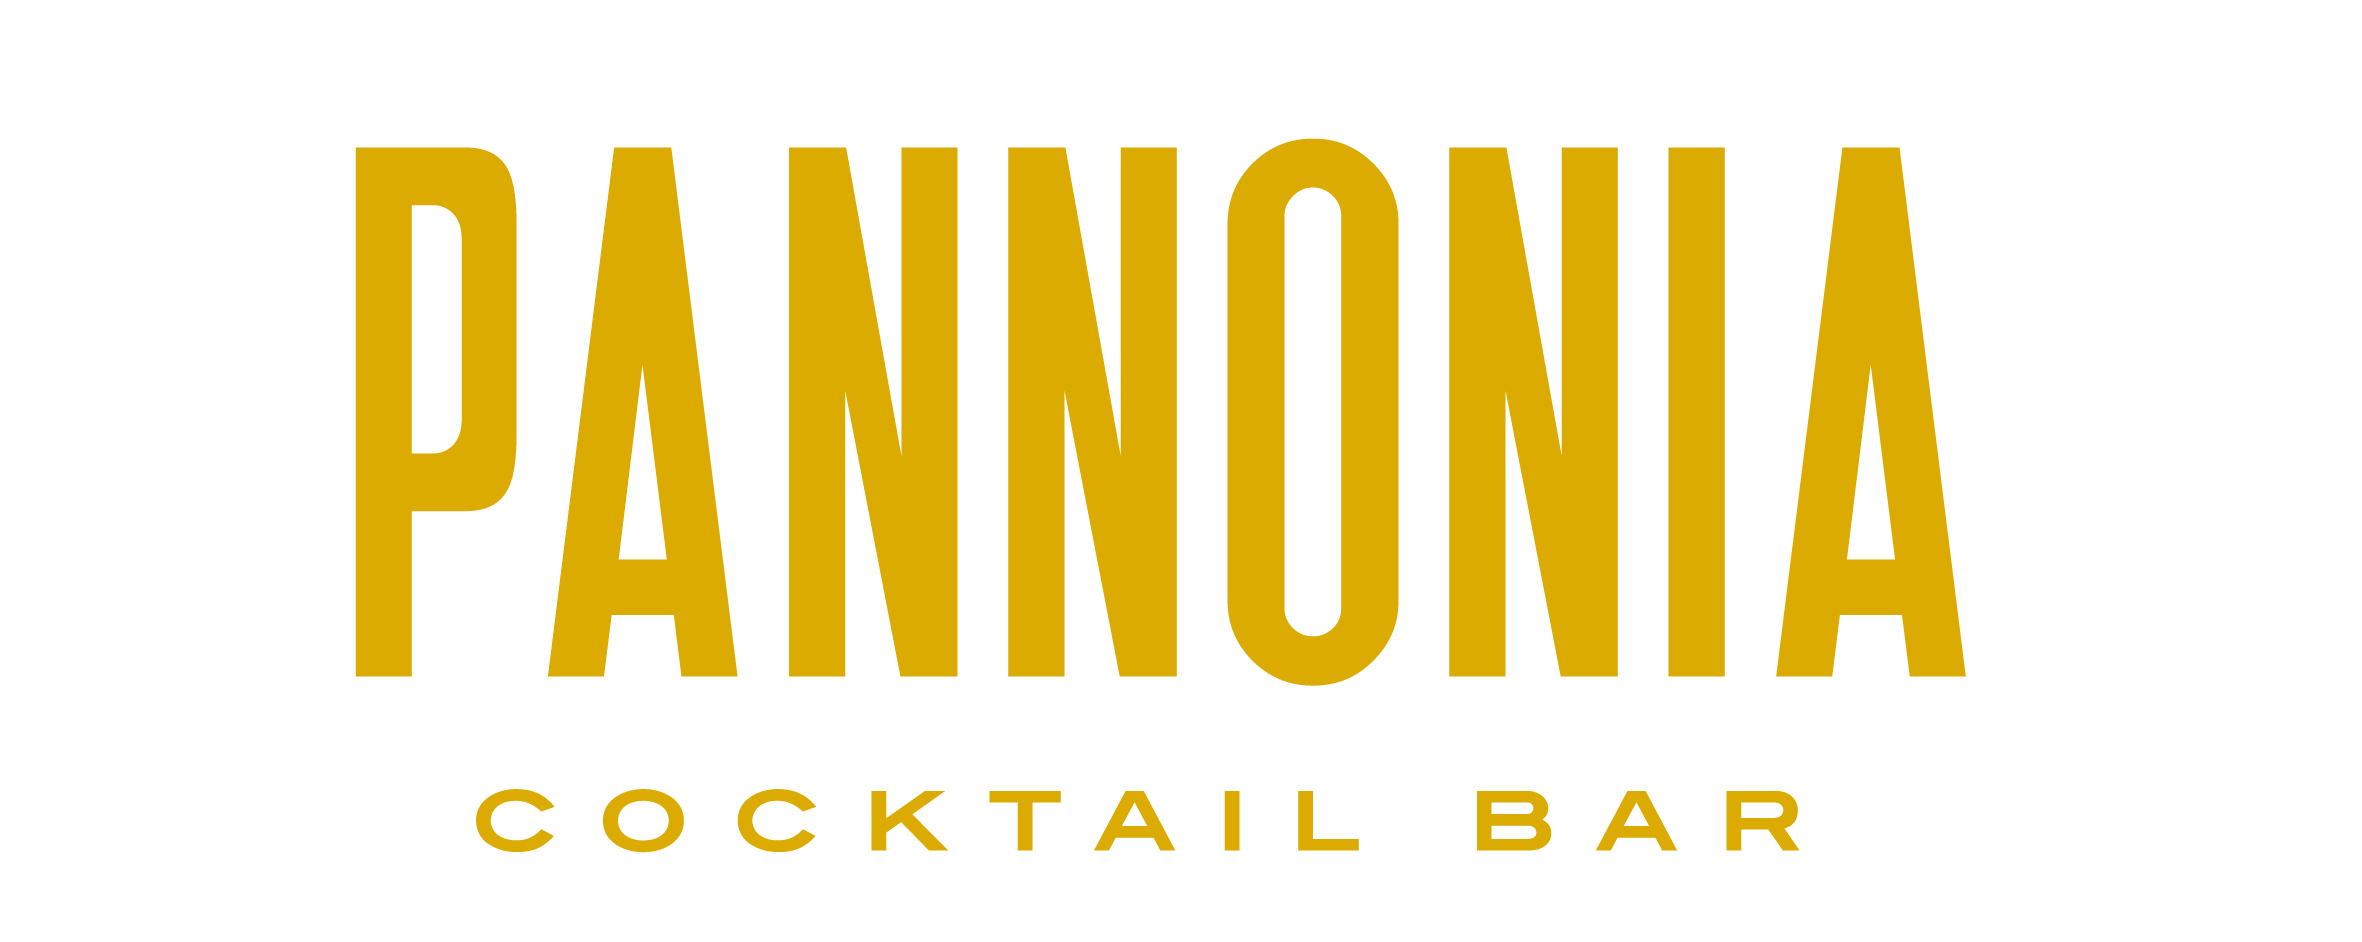 Pannonia Cocktail Bar